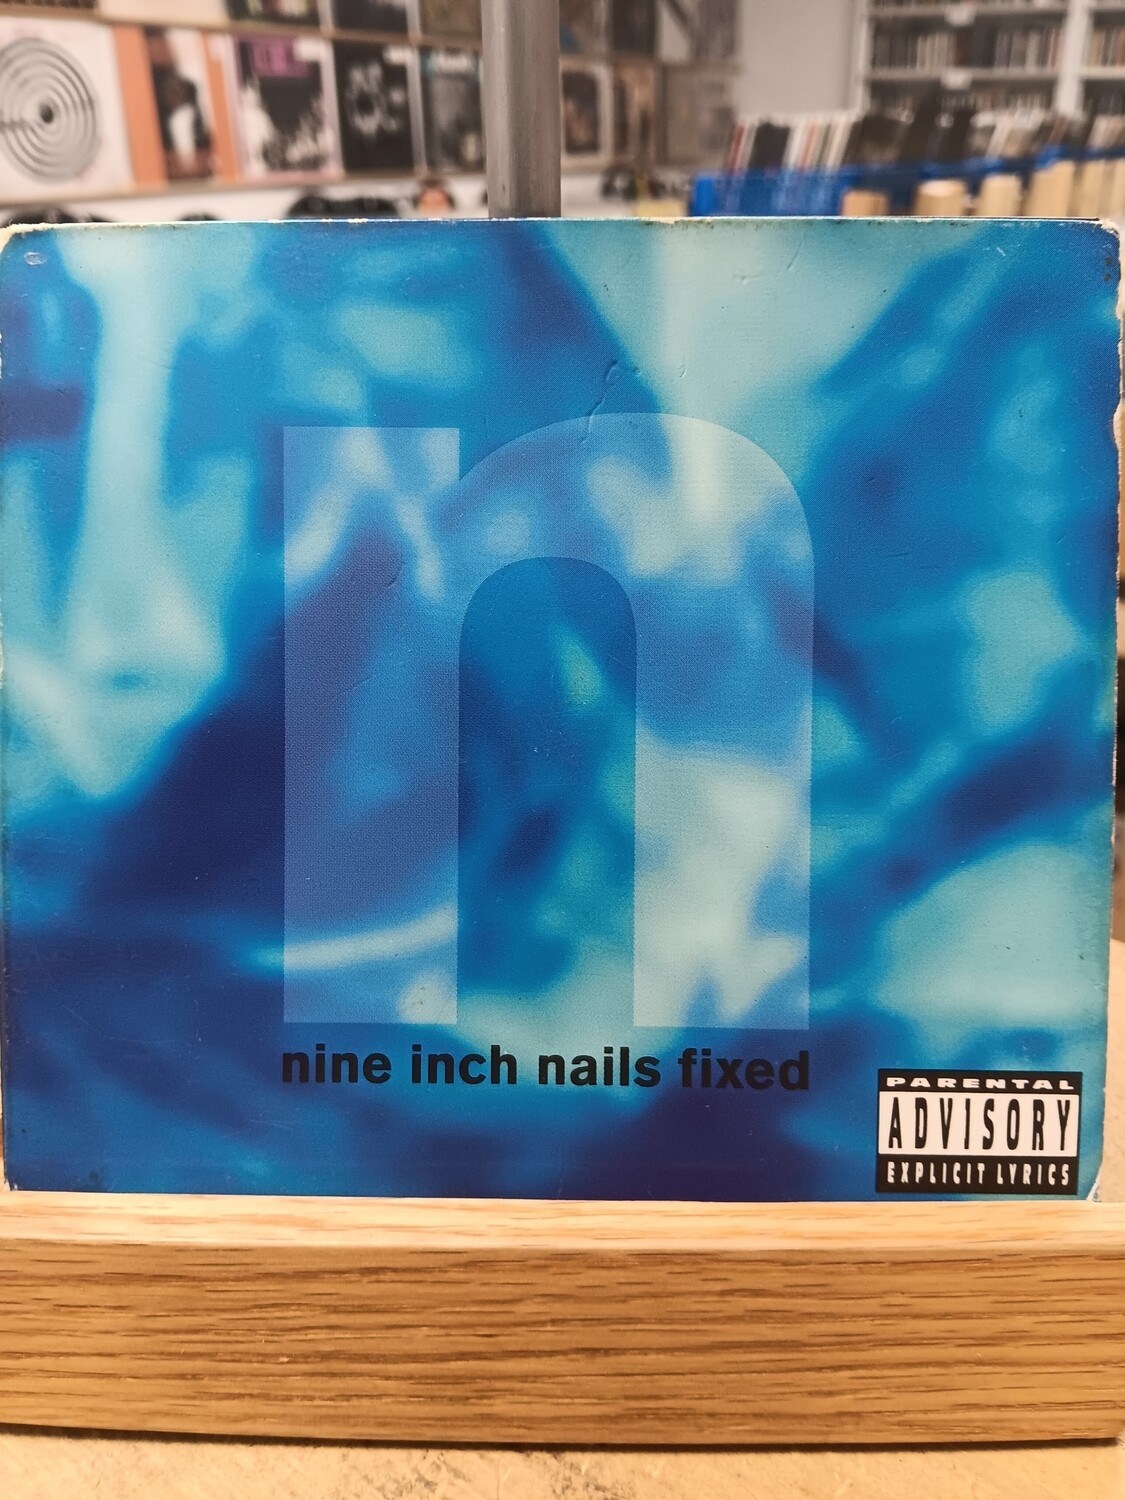 NINE INCH NAILS - FIXED (CD)